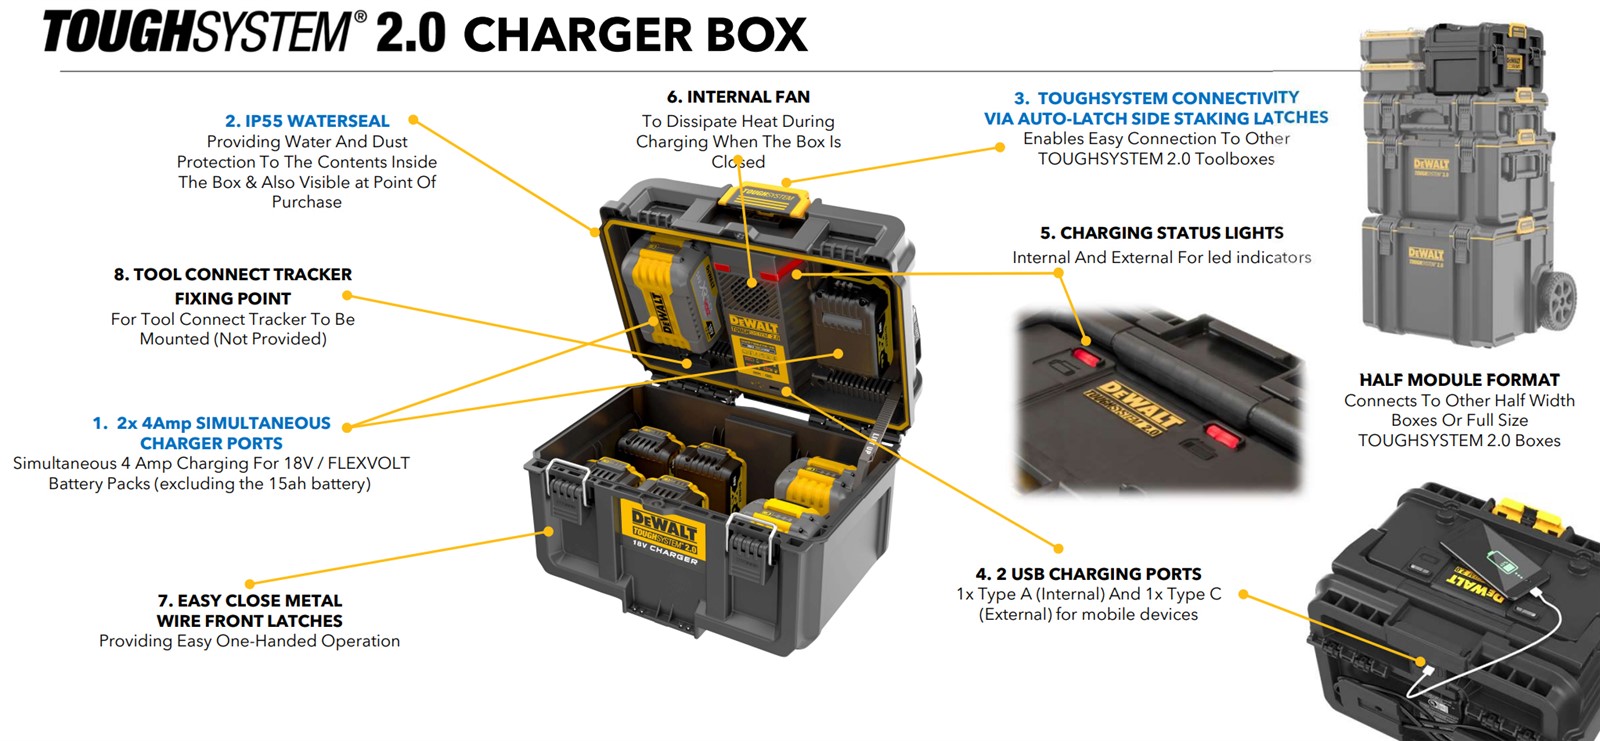 XR Battery Charge 2.0 eBay DWST83470-GB Box 18 Charger | 54v DeWalt / Toughsystem USB